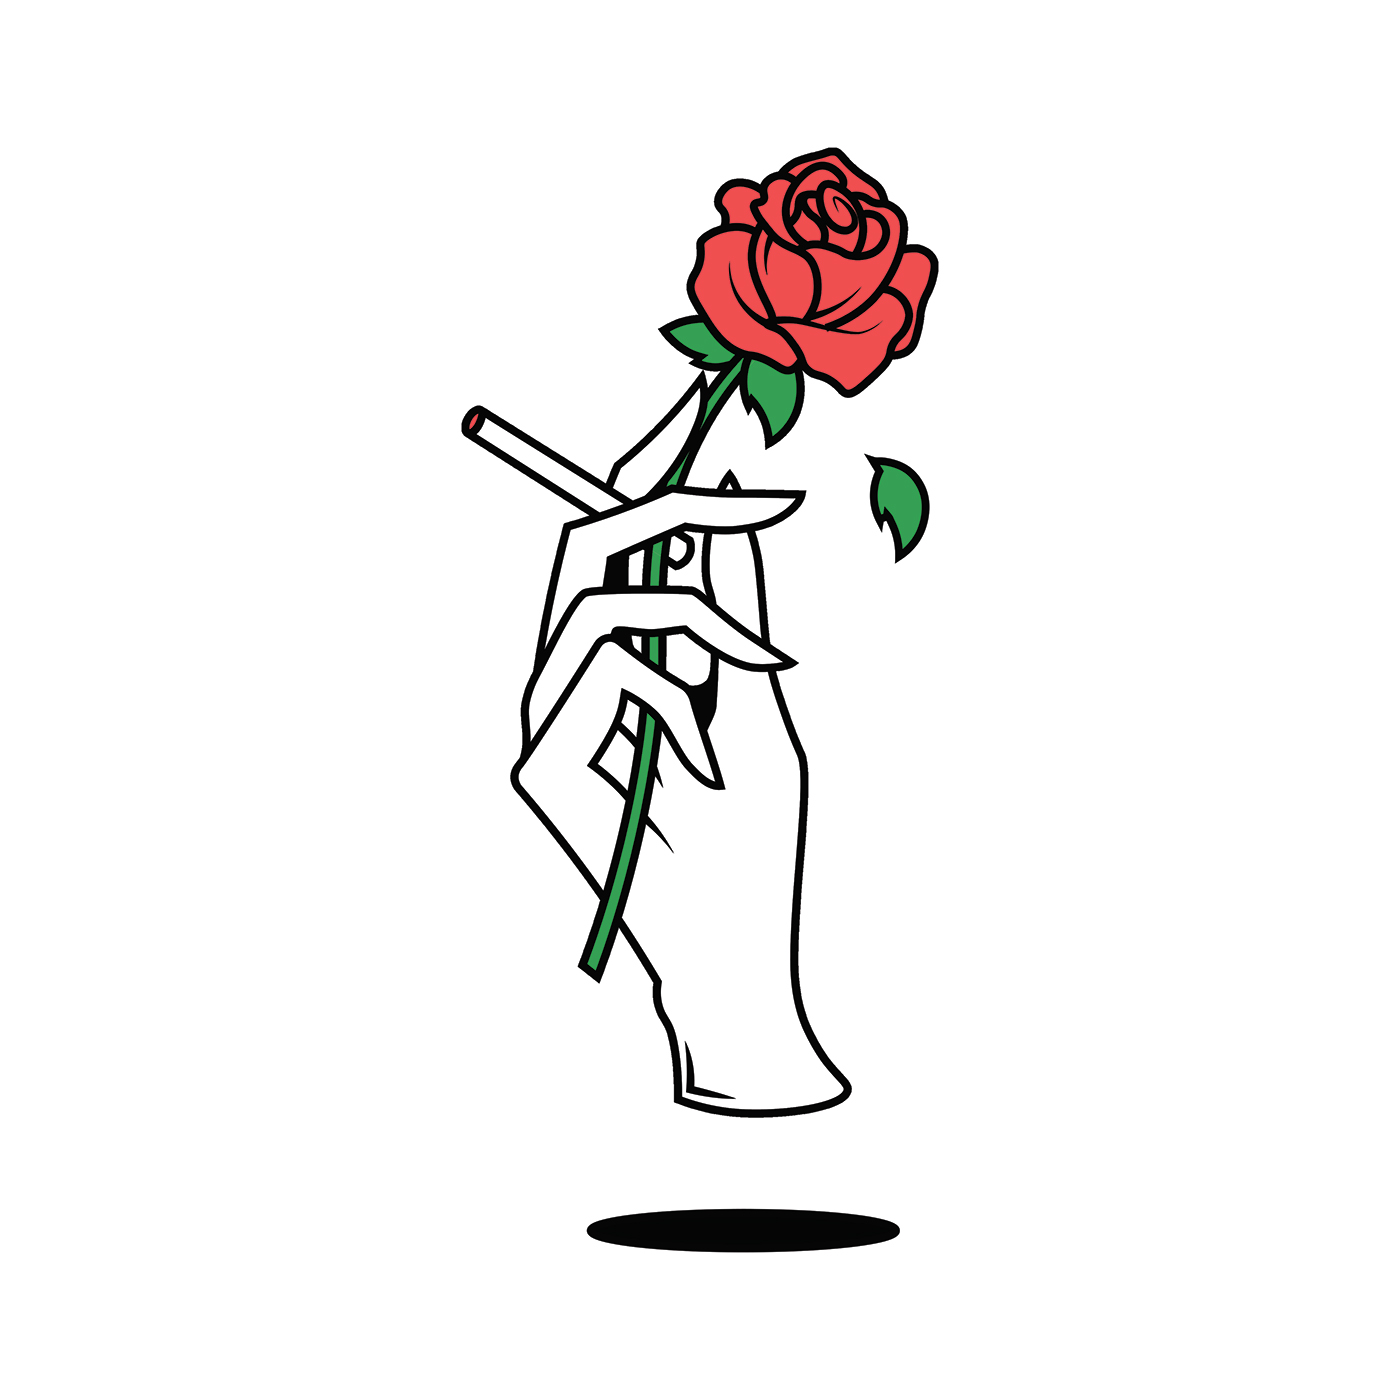 Hand holding cigarette and rose illustration on Behance